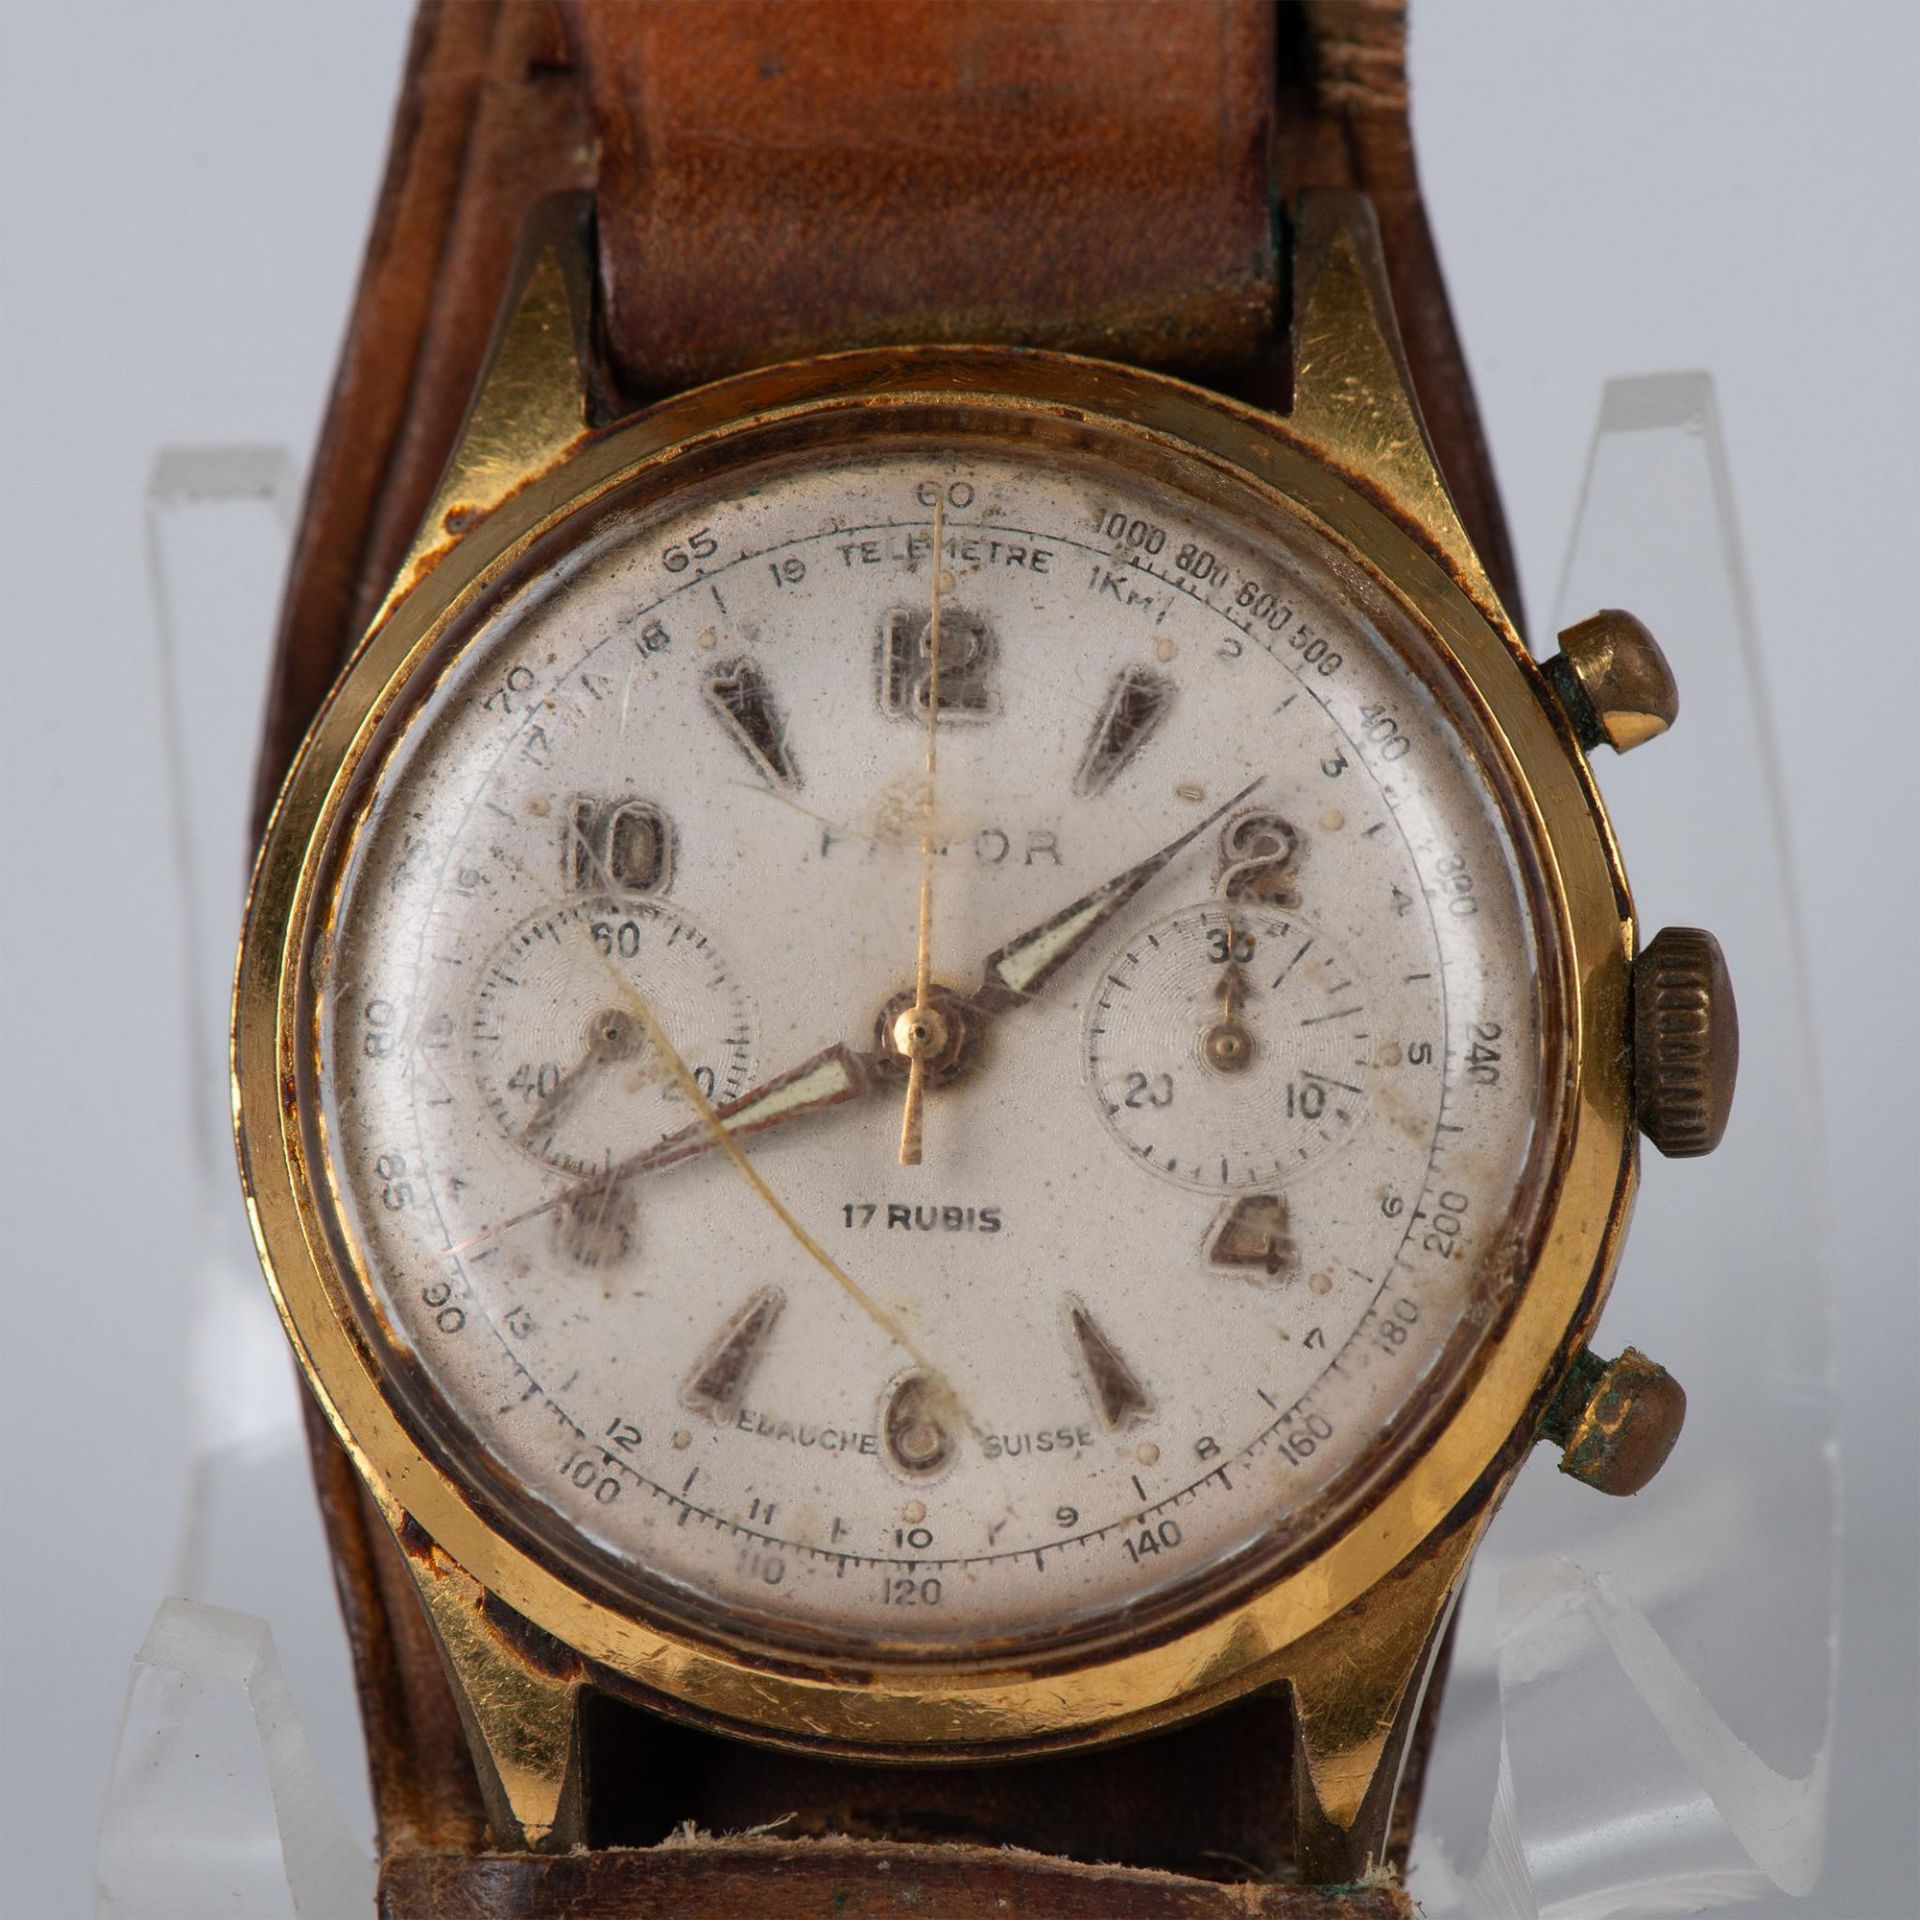 Gents 1950s/60s Favor Chronograph Wrist Watch